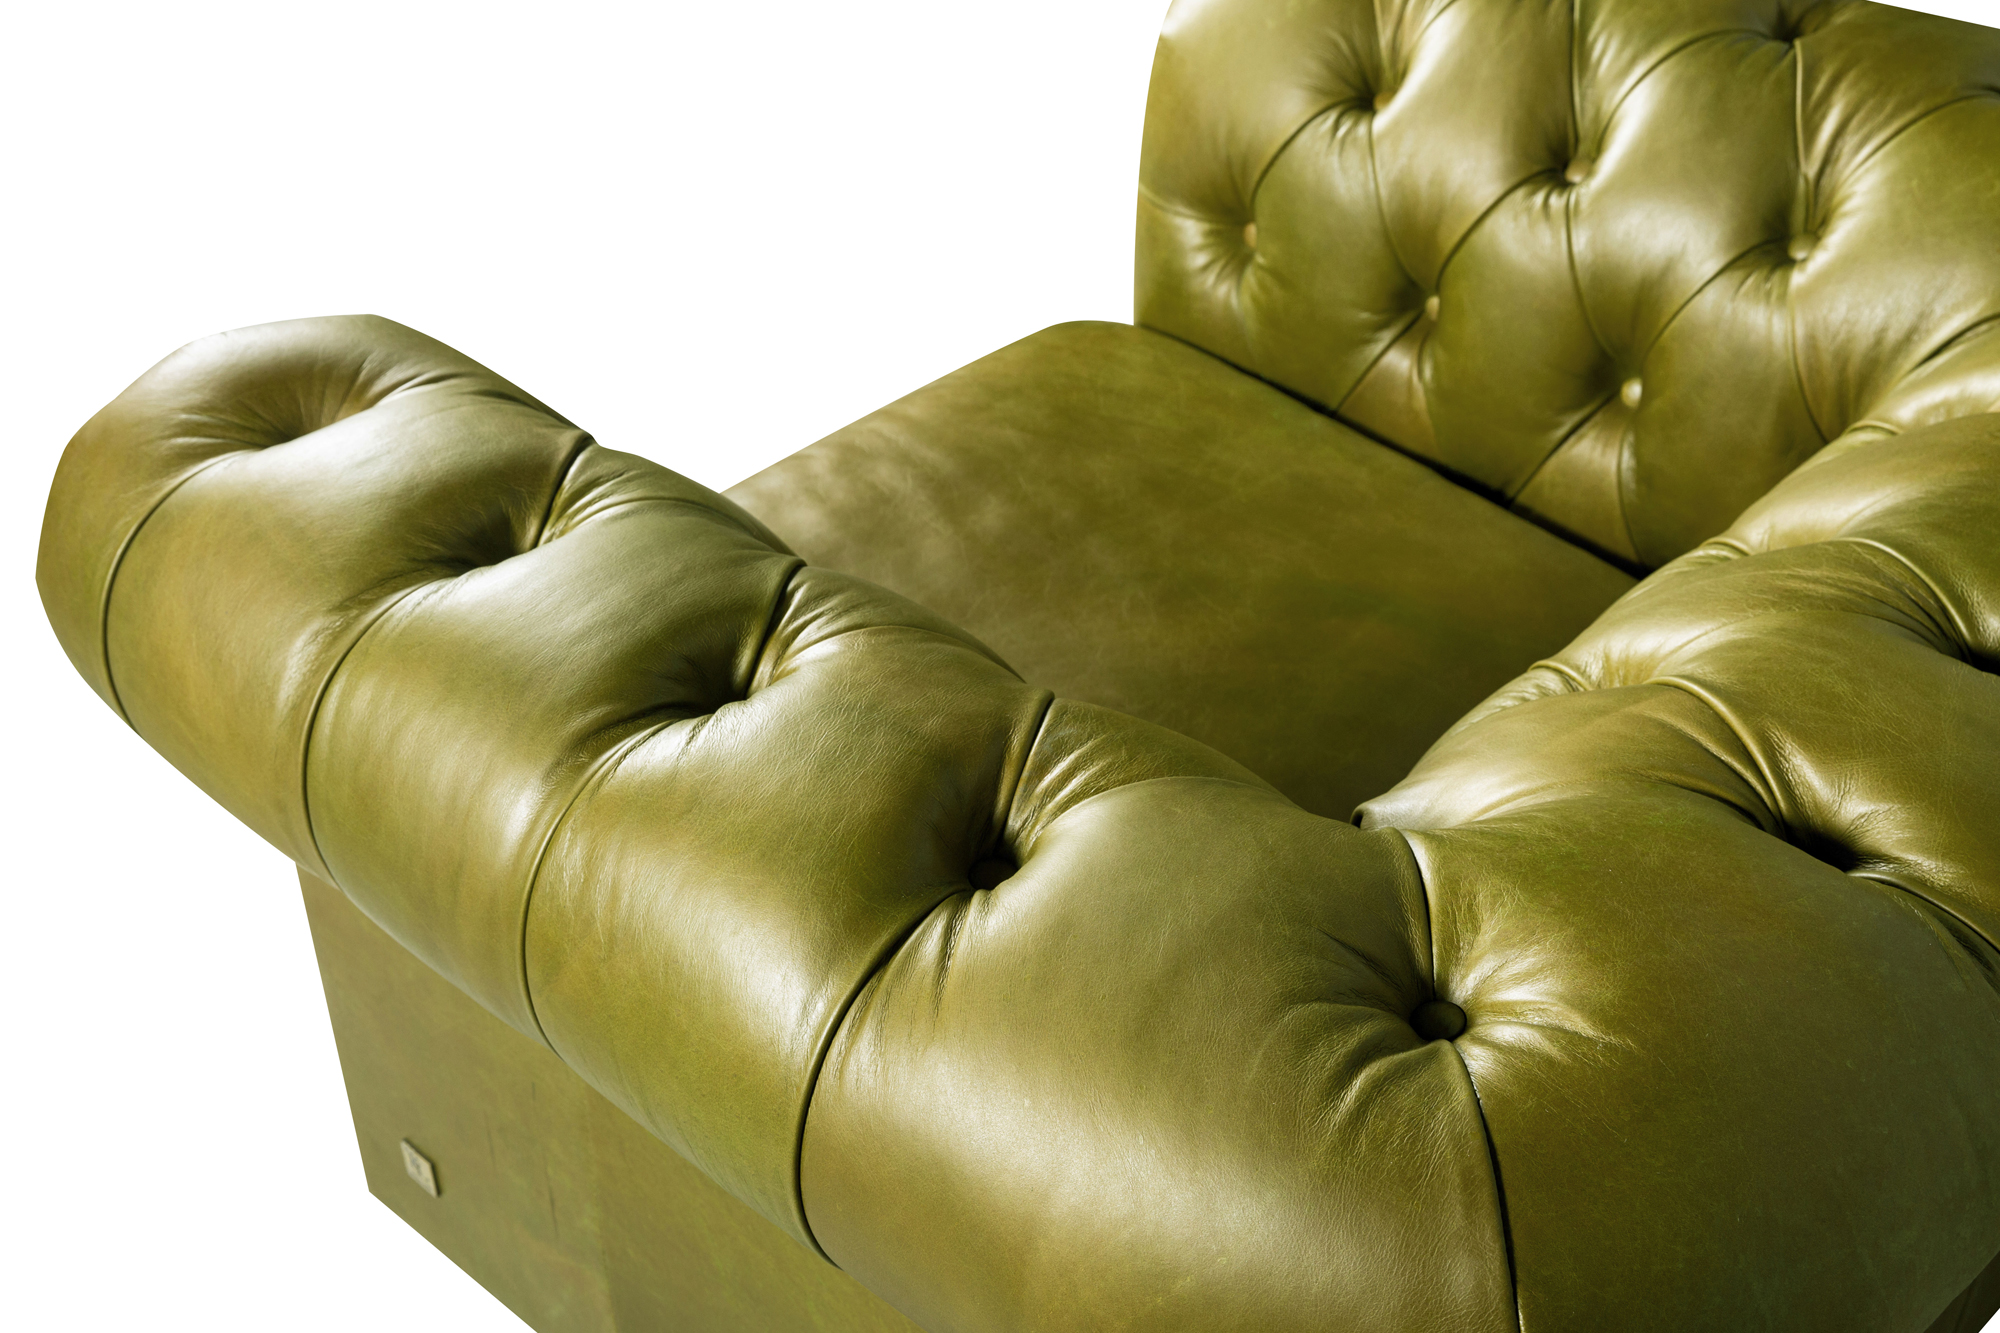 Oxford Single Seat Leather Sofa Olive Green